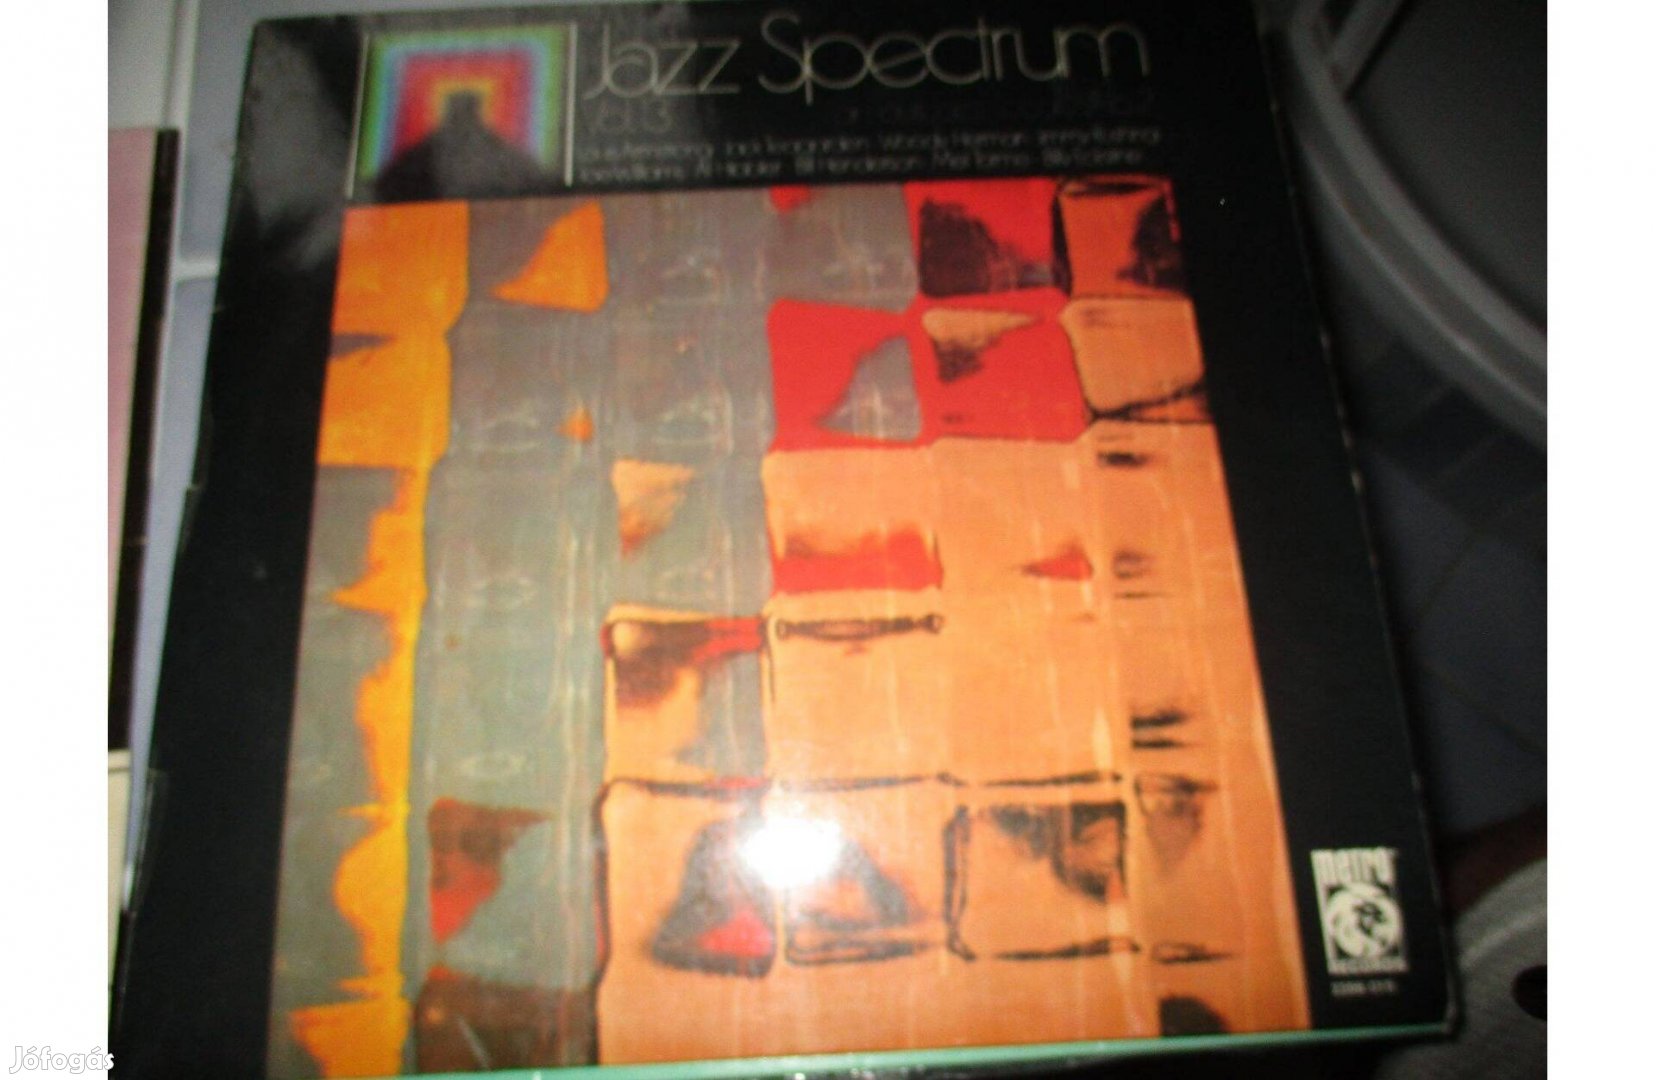 Jazz Spectrum bakelit hanglemez eladó